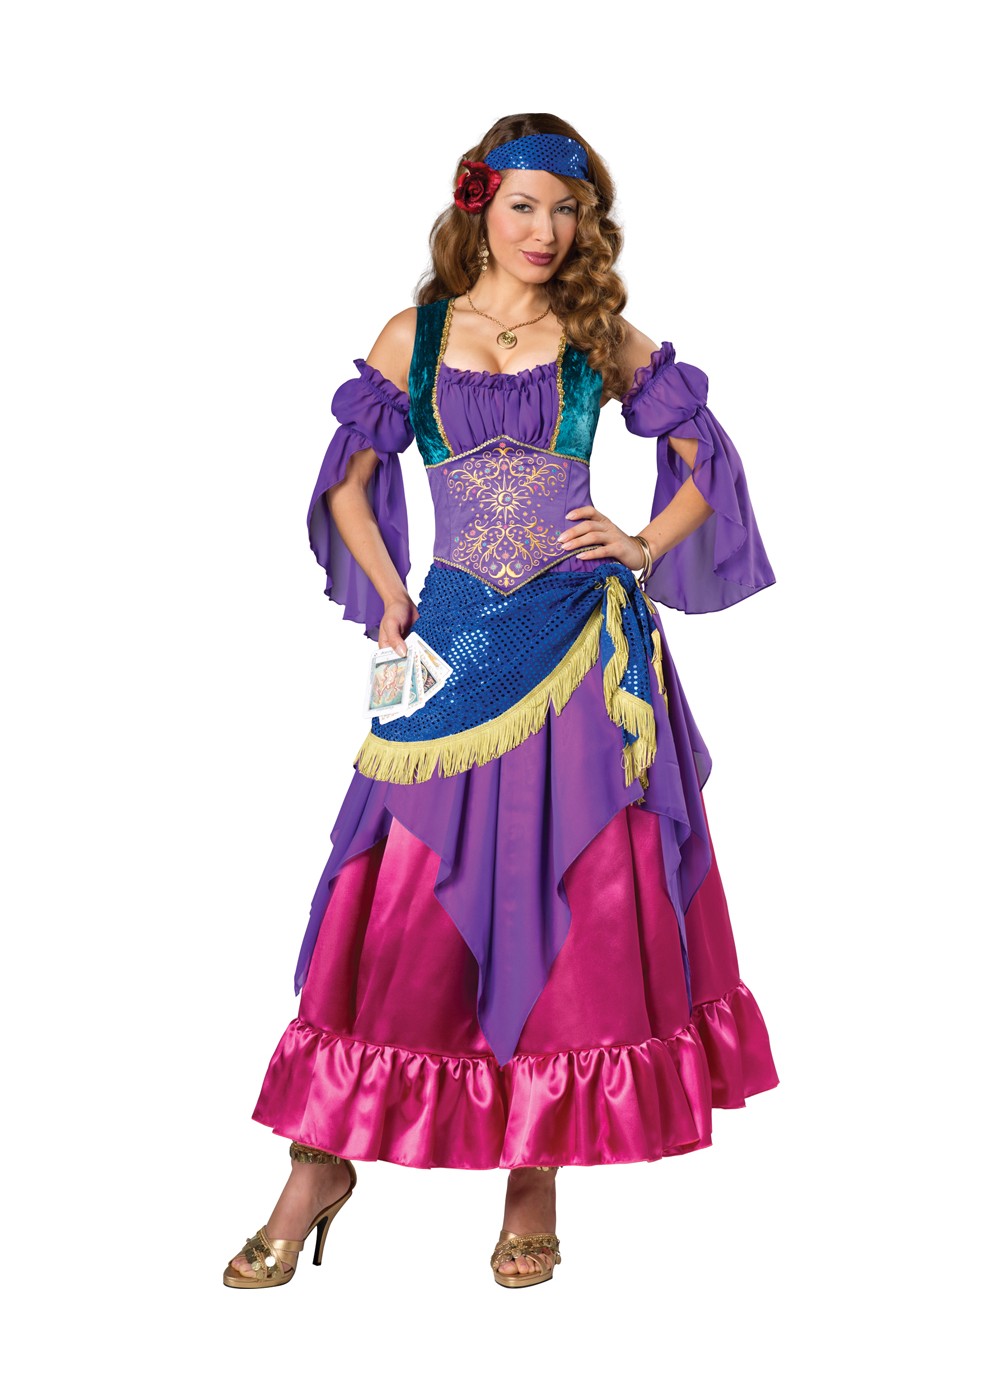 Gypsy Treasure Woman Costume